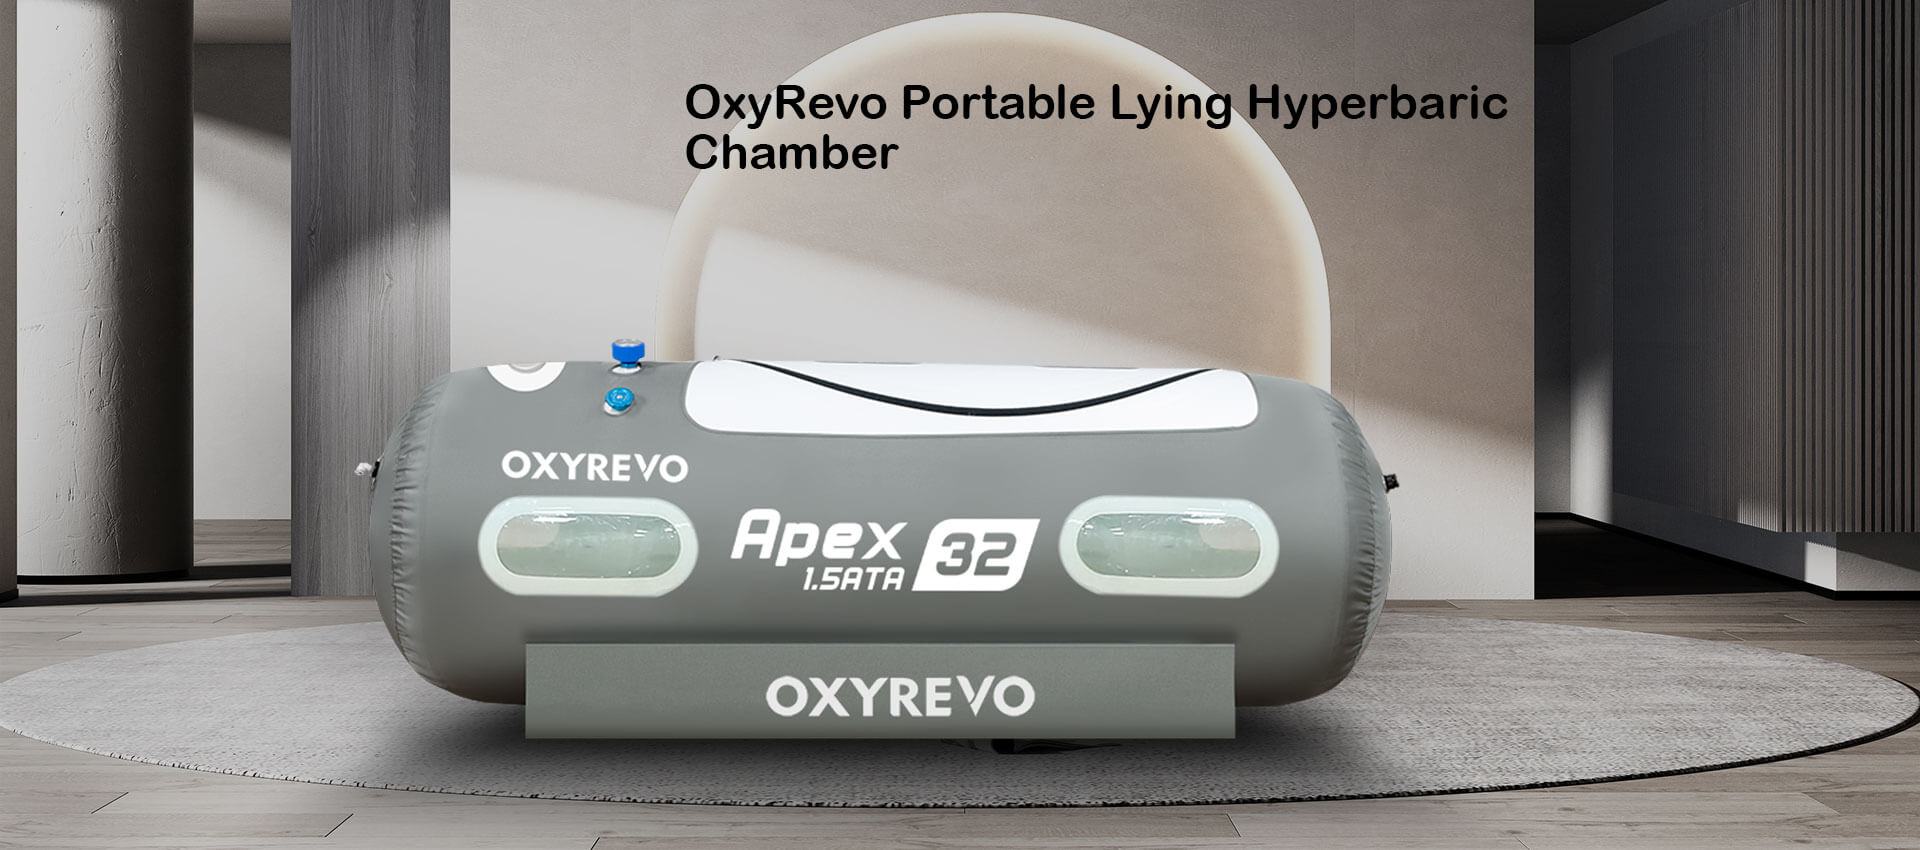 OxyRevo Portable Hyperbaric Chambers